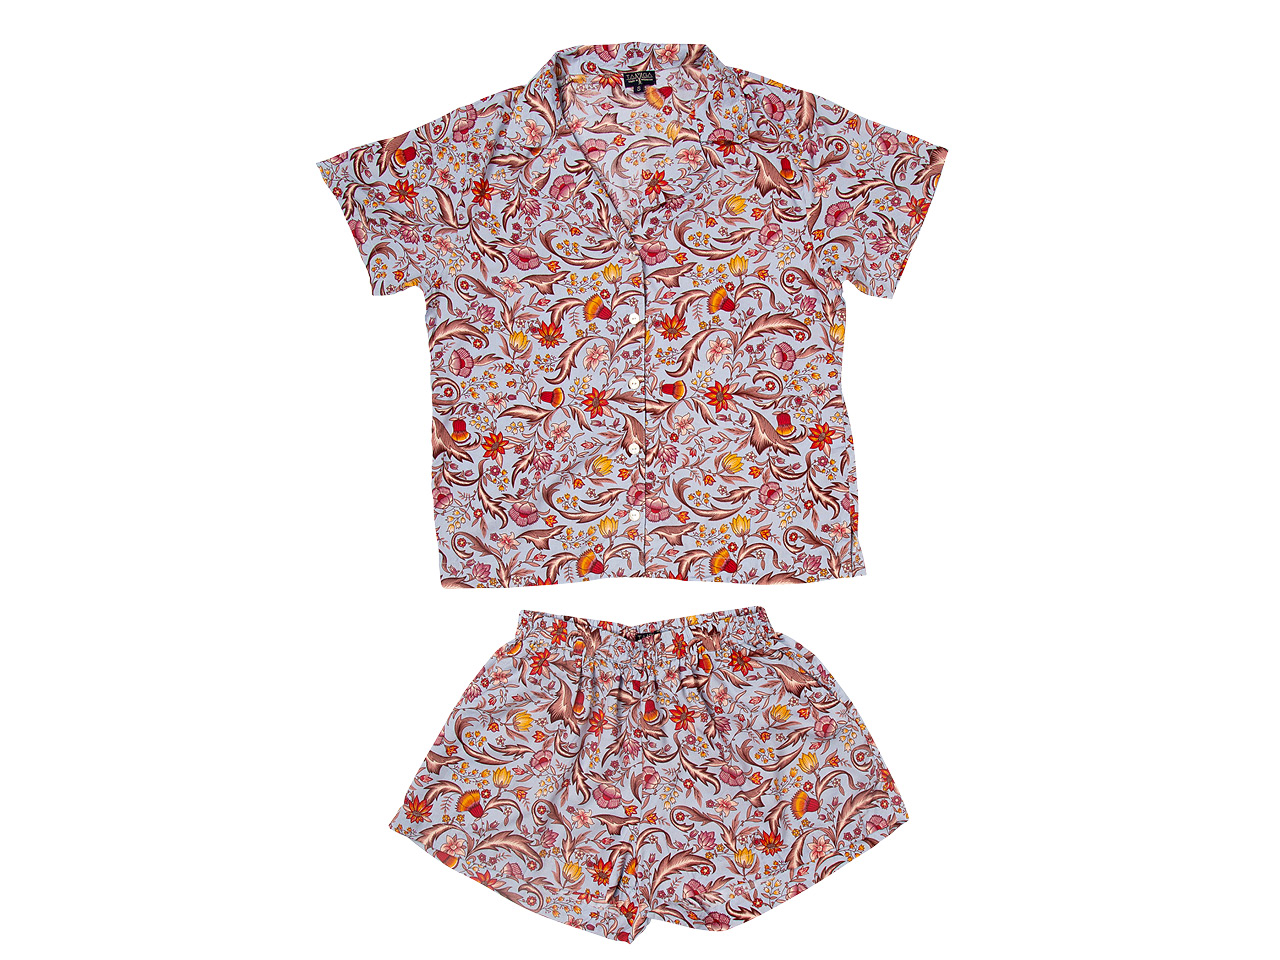 Matching printed short sleeve shirt and shorts sleepwear set.